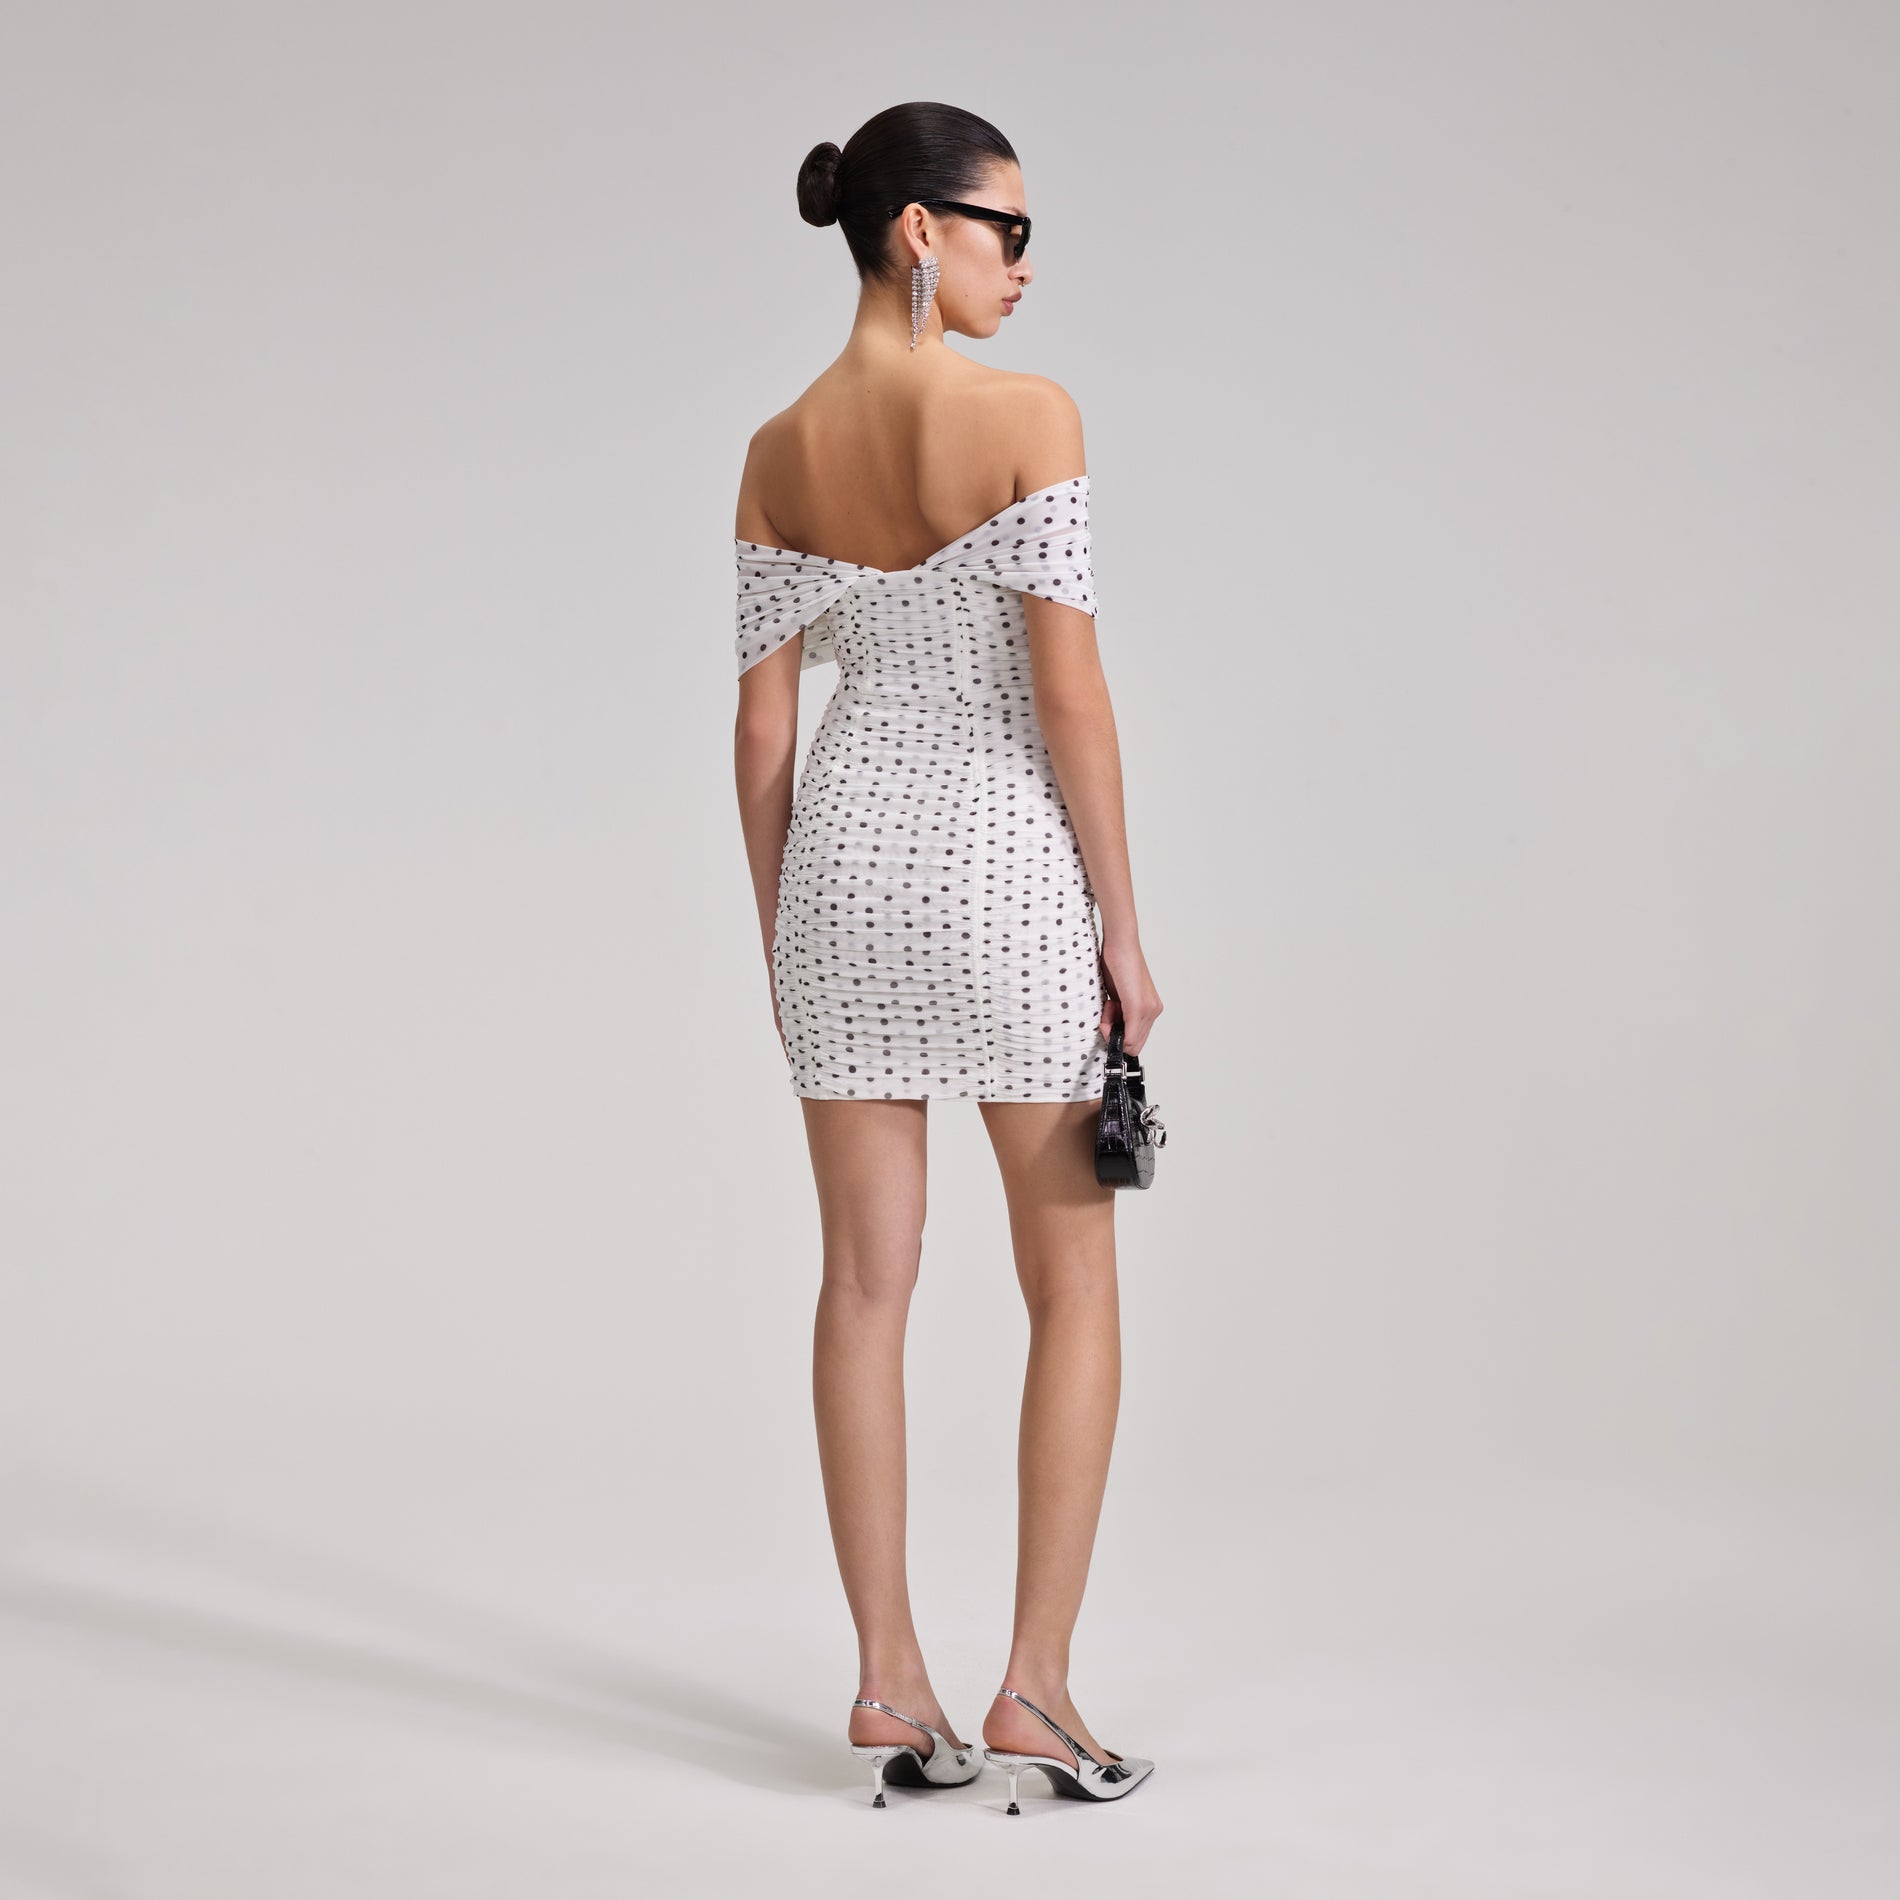 A woman wearing the Polka Dot Off Shoulder Mini Dress